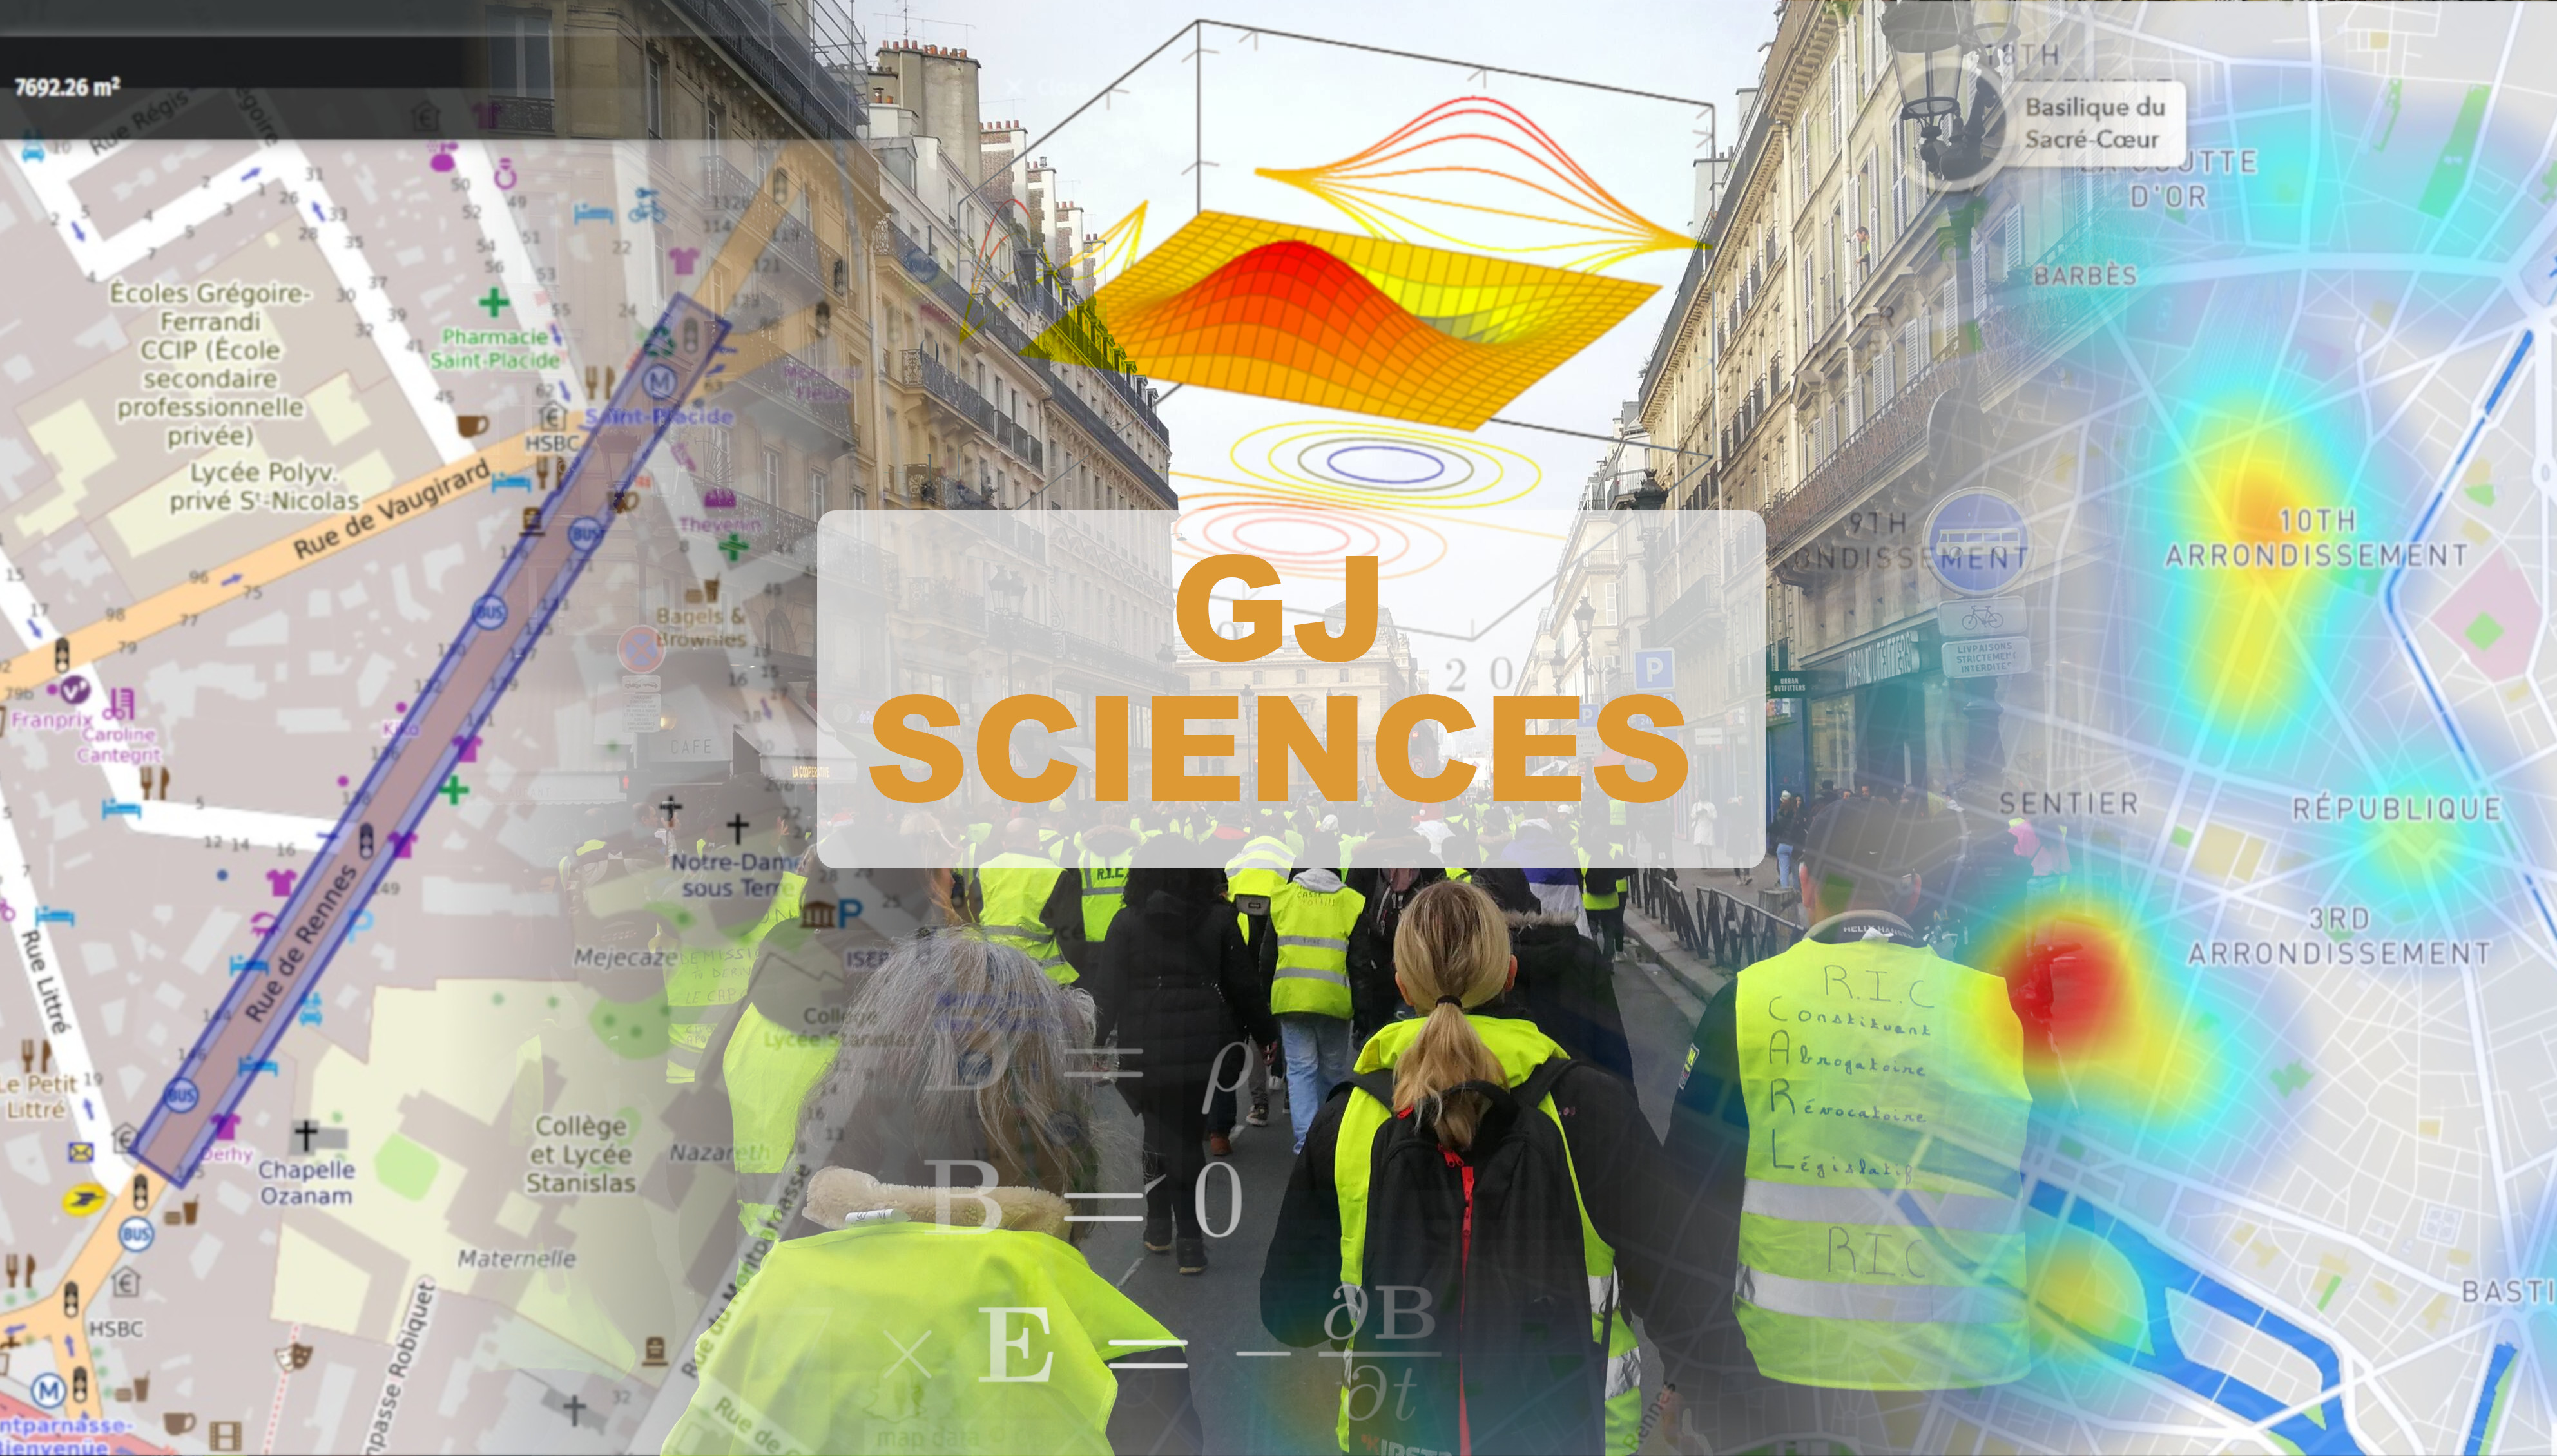 GJ Sciences